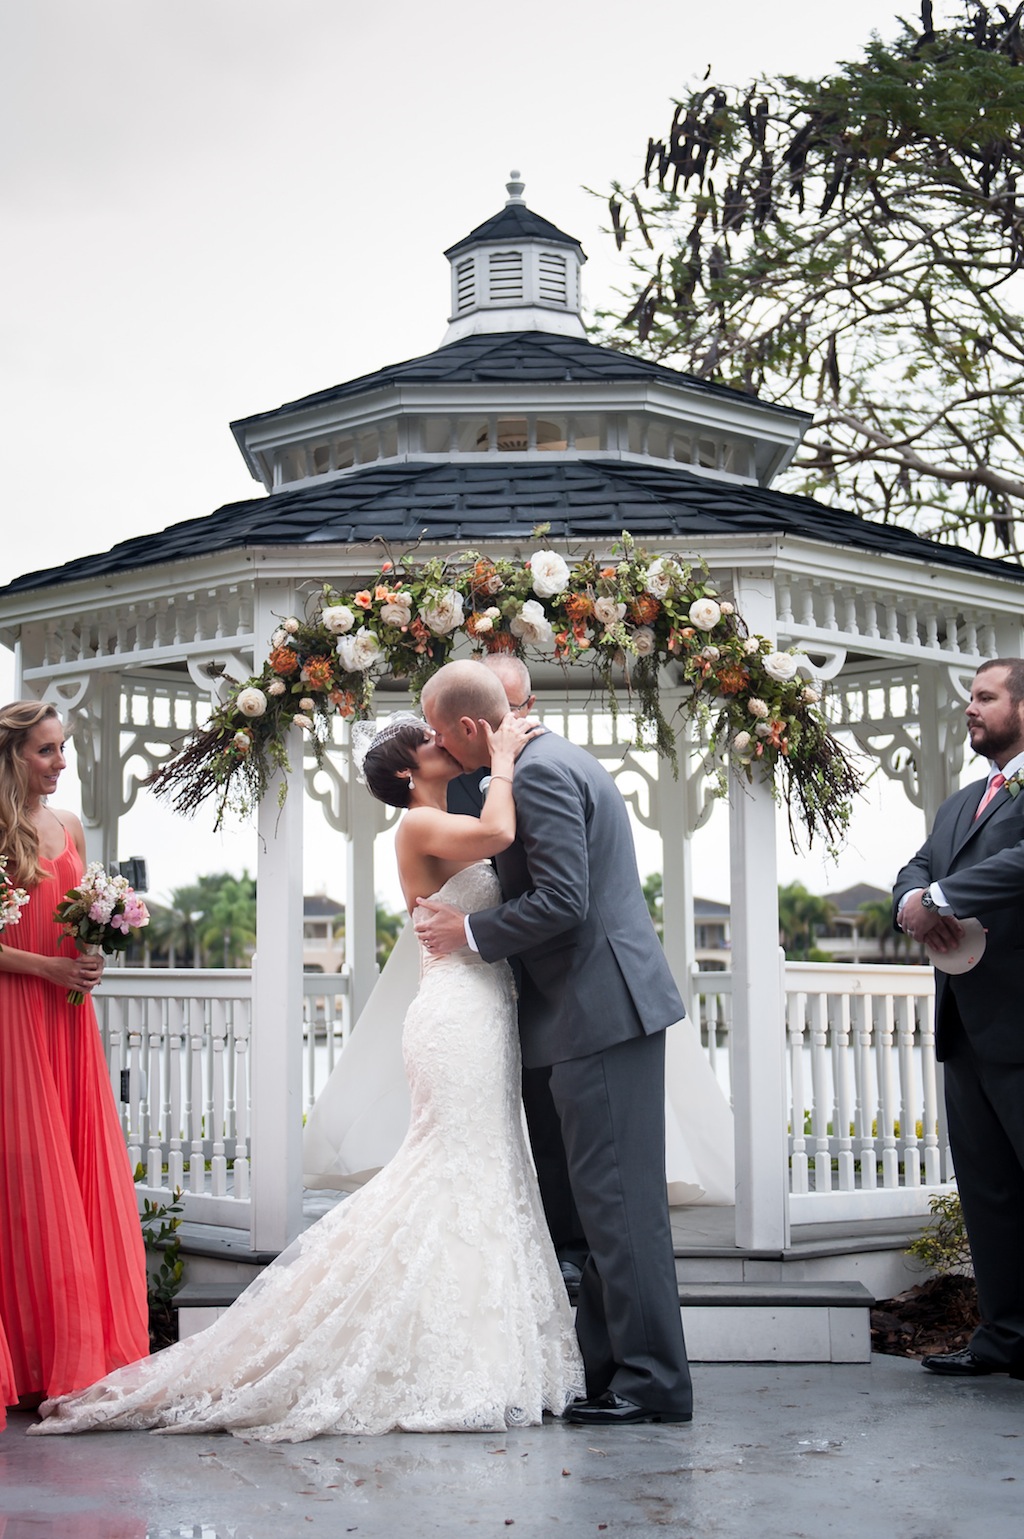 Davis Island Garden Club Wedding - Coral and Mint Green Natural Wedding - Tampa Wedding Photographer Sarah & Ben (26)